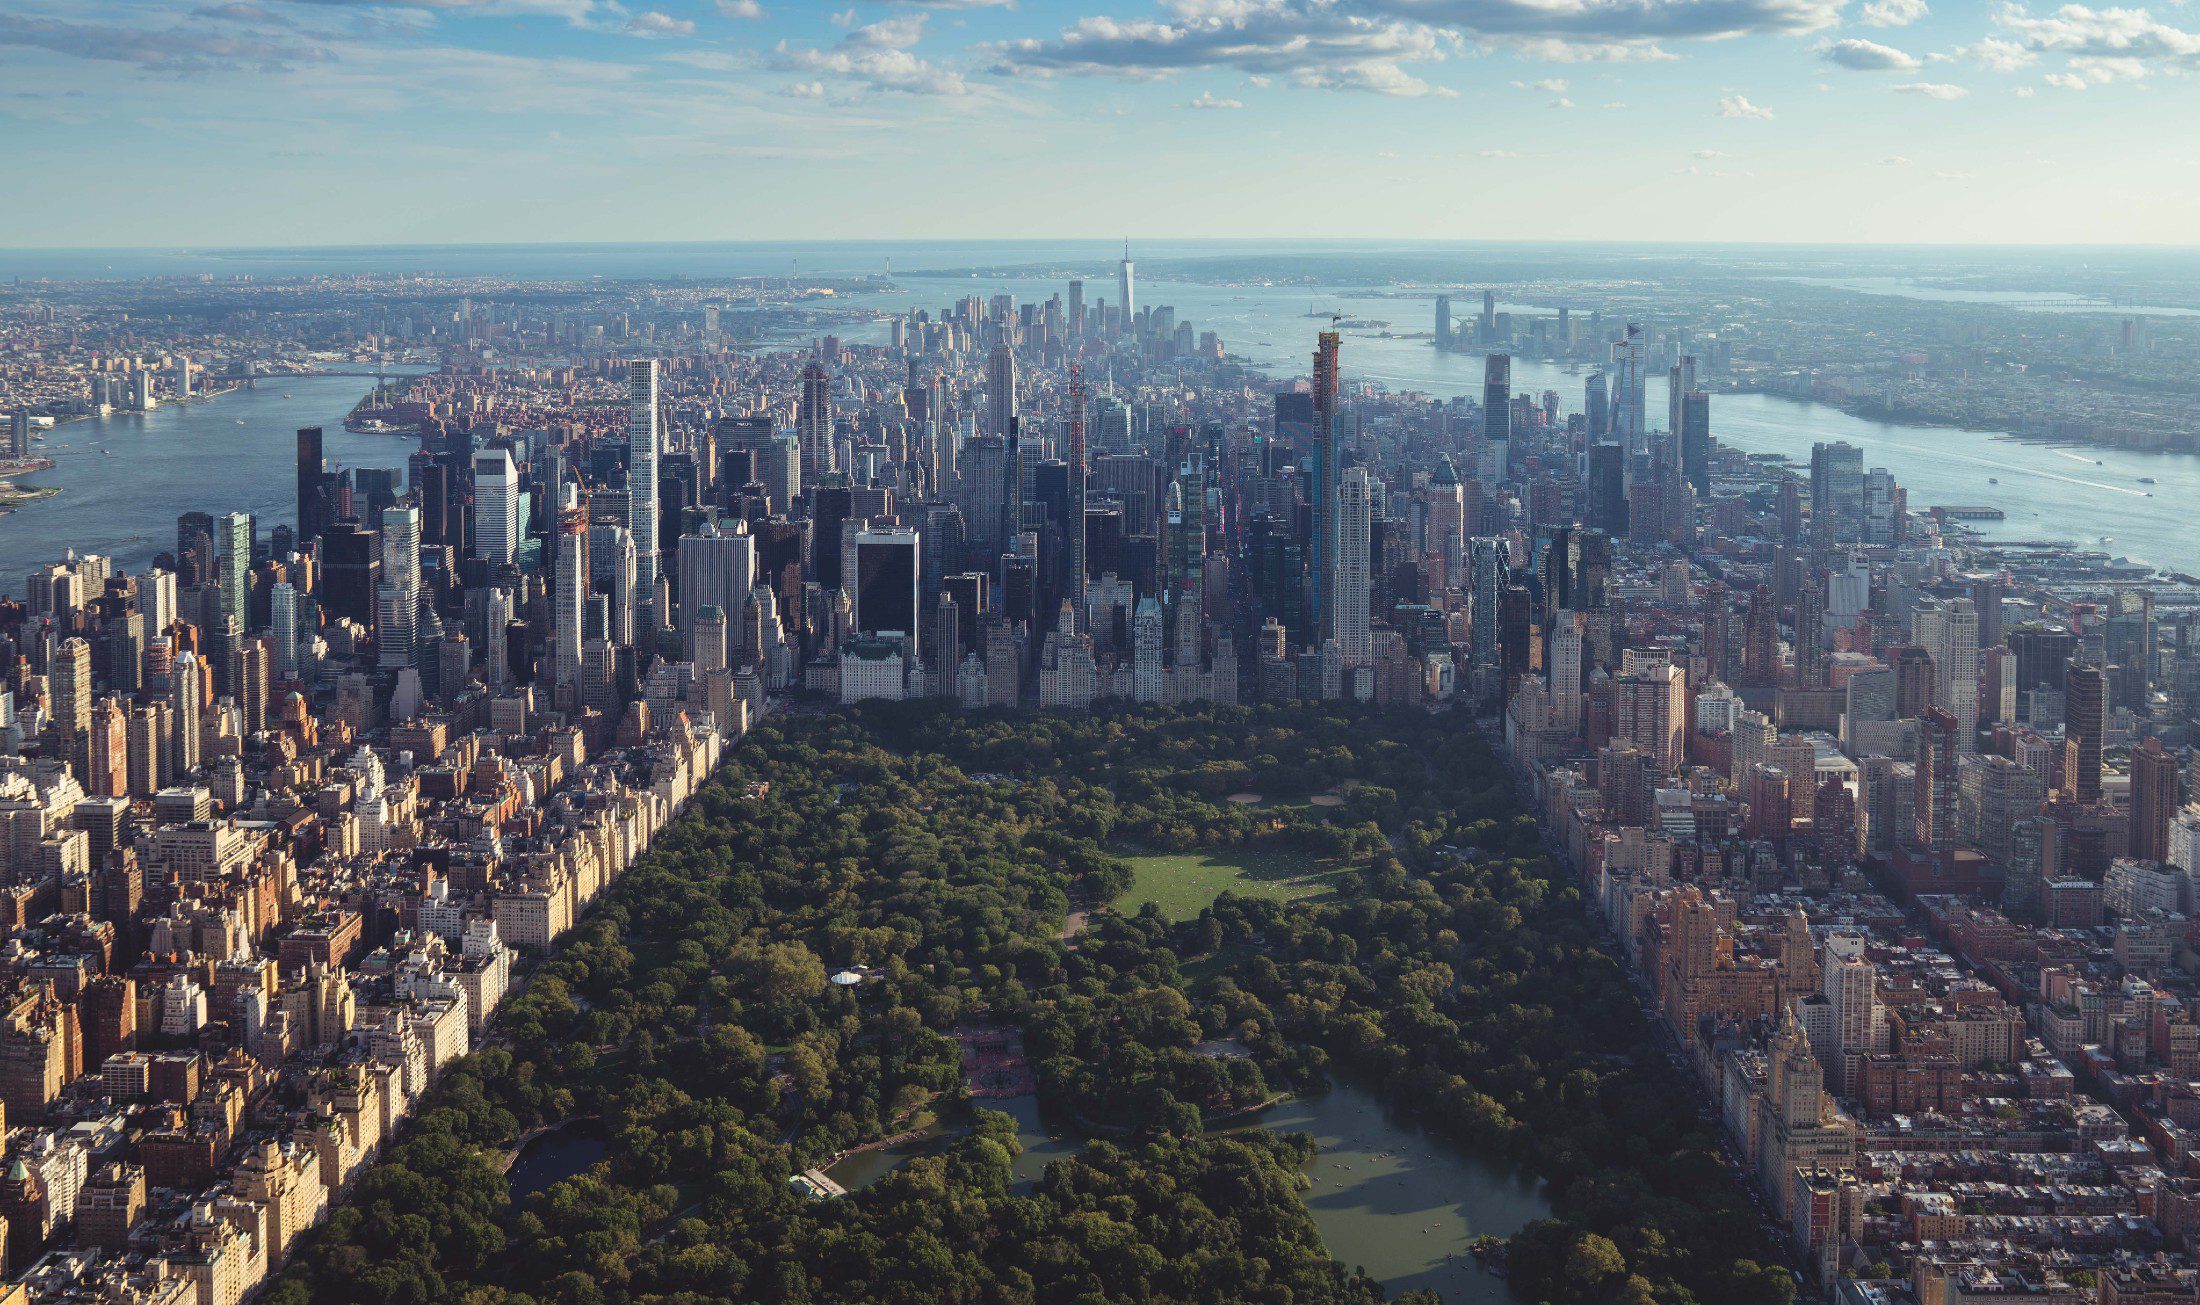 New york city versus LA - Emjay - Photo by Jermaine Ee on Unsplash